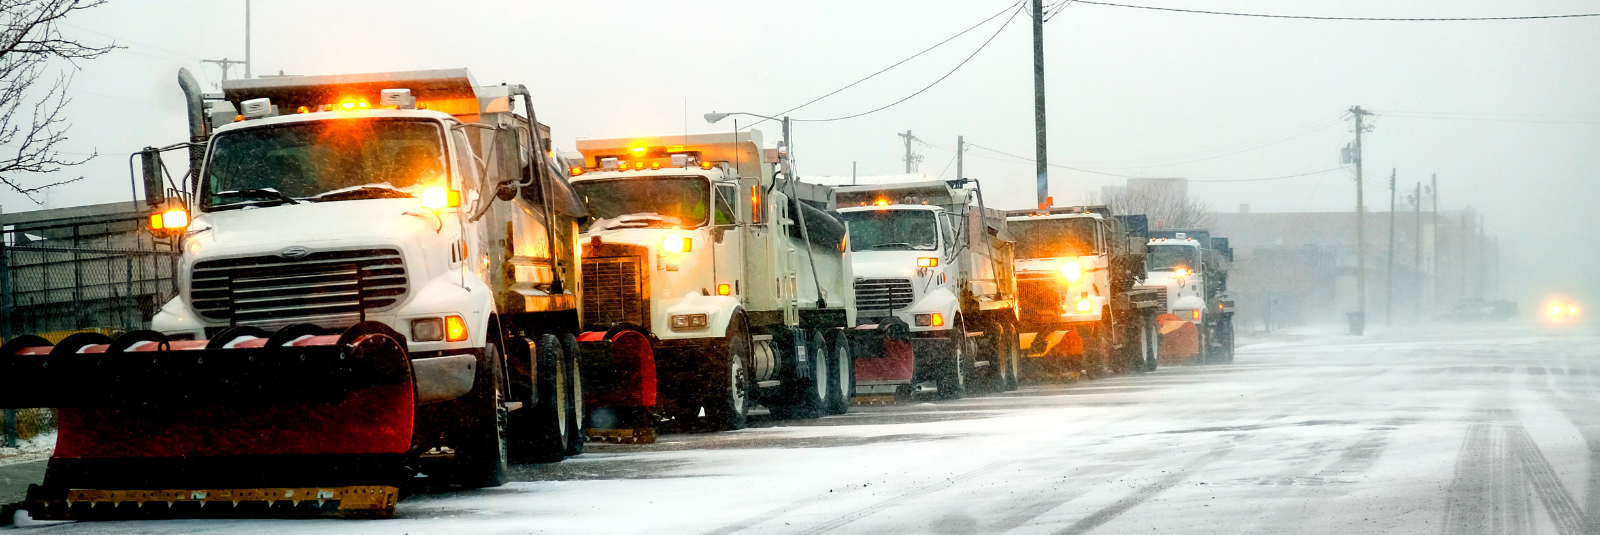 a line of snow pile trucks